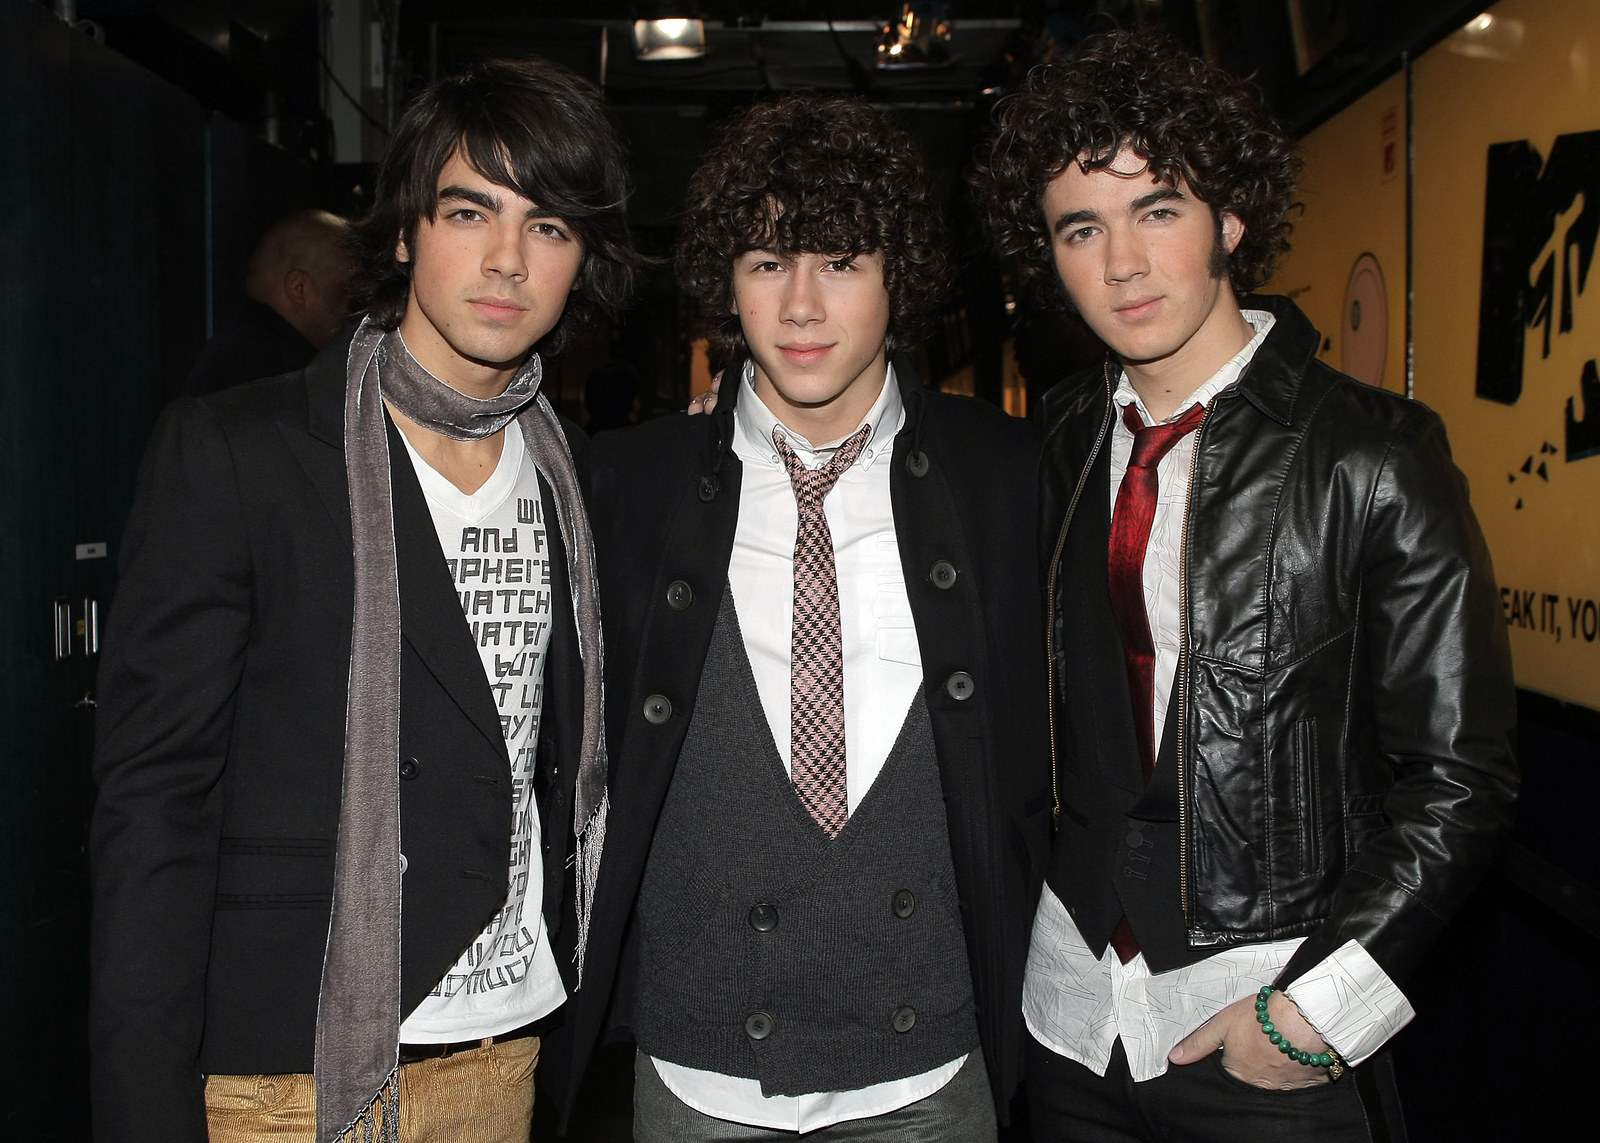 Jonas brothers песни. Братья Джонас. Группа Jonas brothers. Джонас 2008. Братья Джонас 2010.